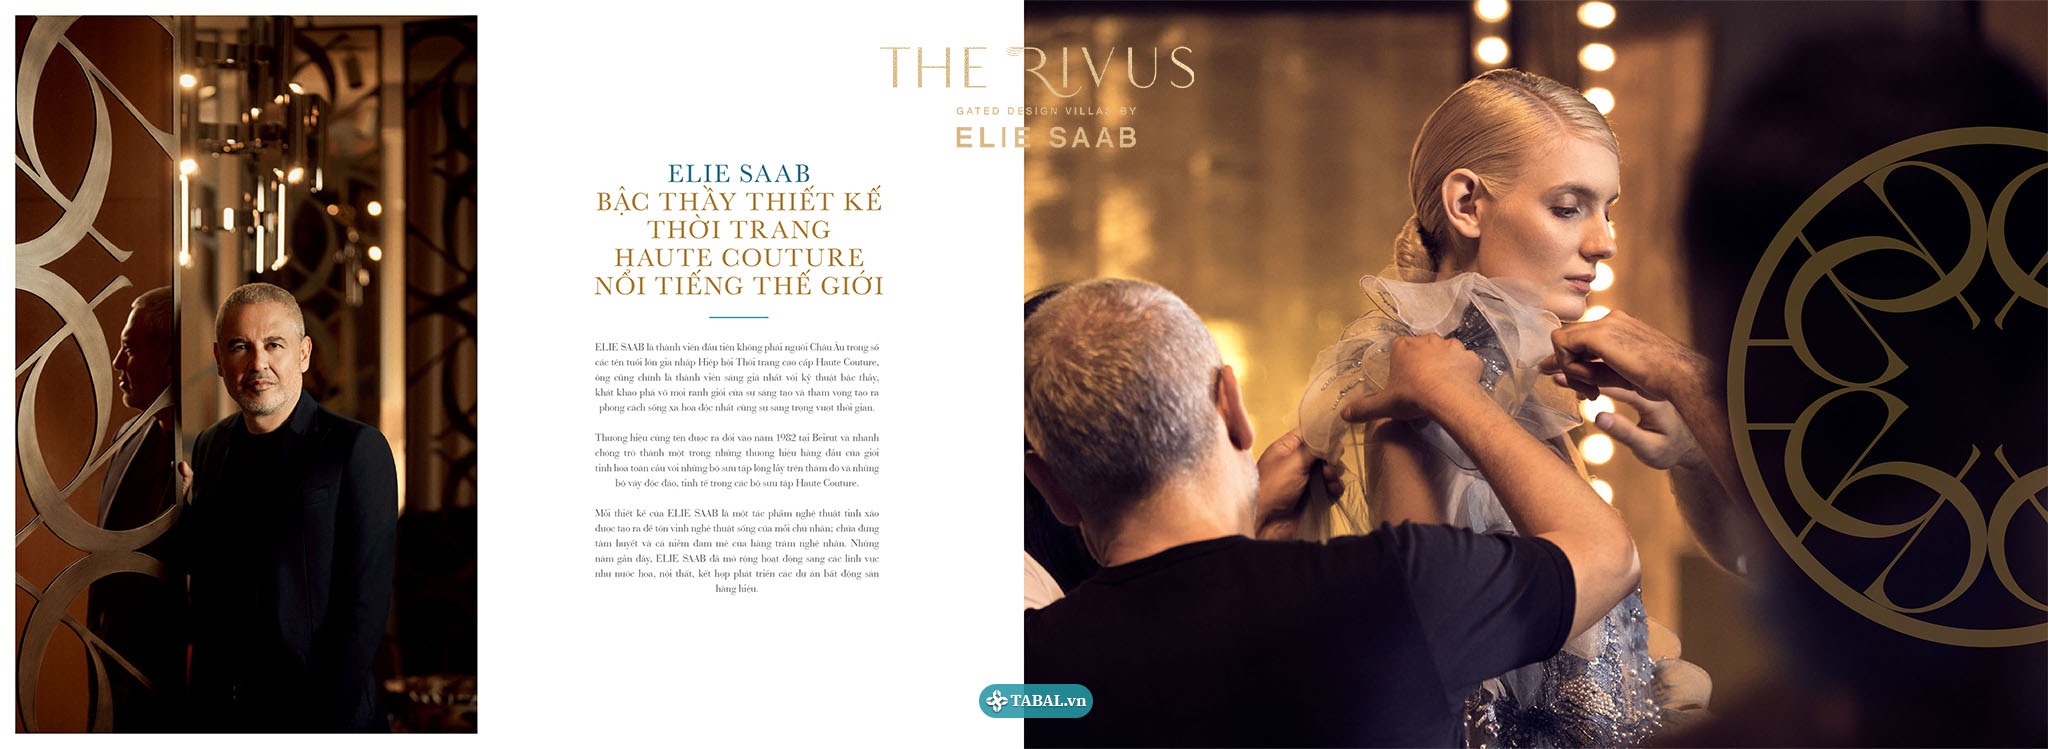 The Rivus - Gated Design By Elie Sabb